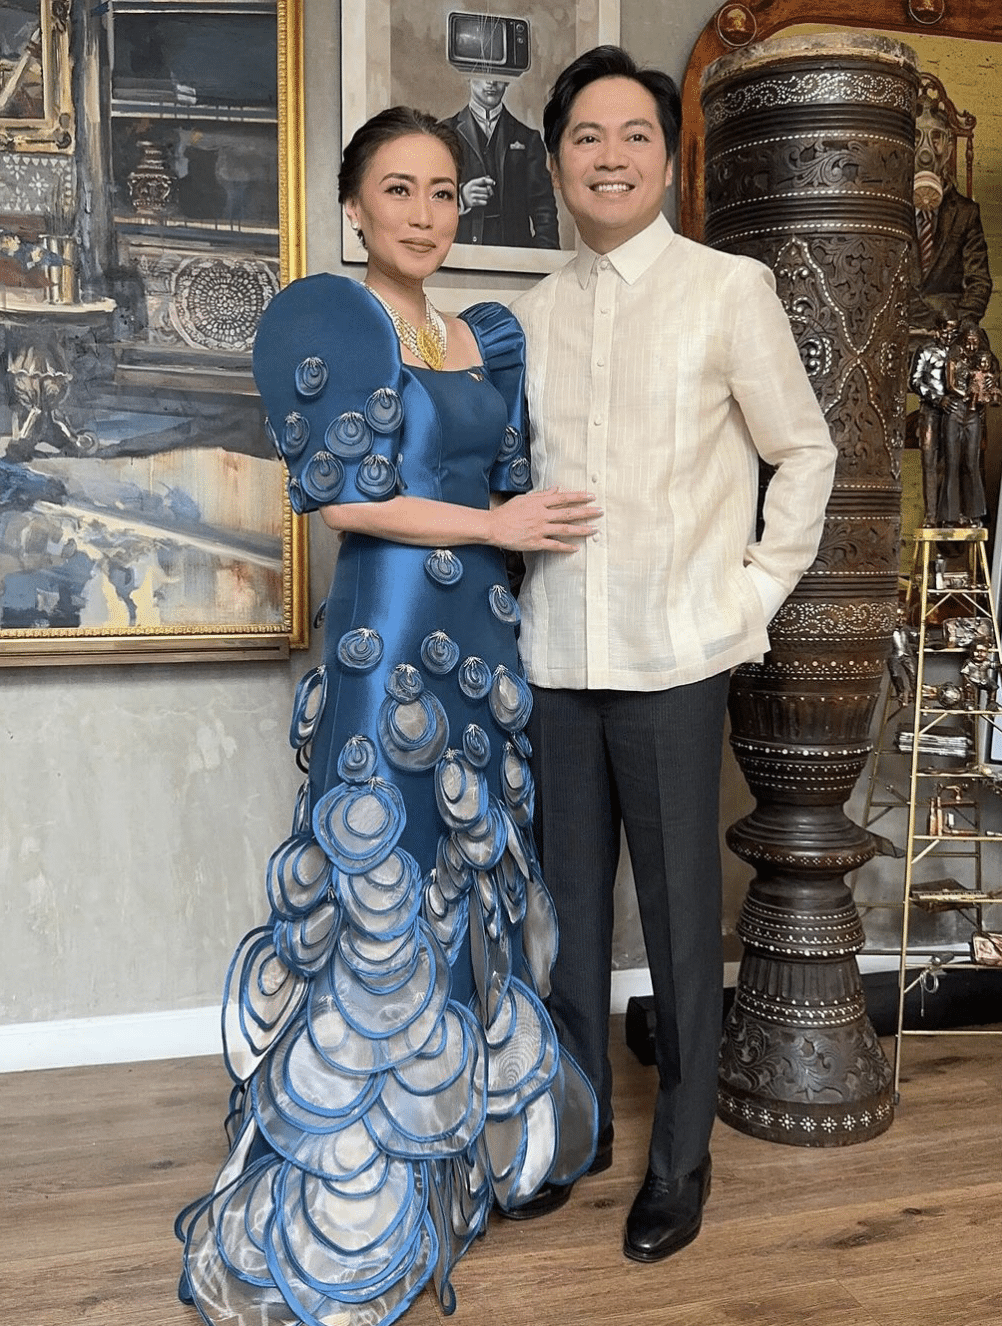 Karlo Nograles and wife Marga Nograles. Image from Puey Quinones / Instagram